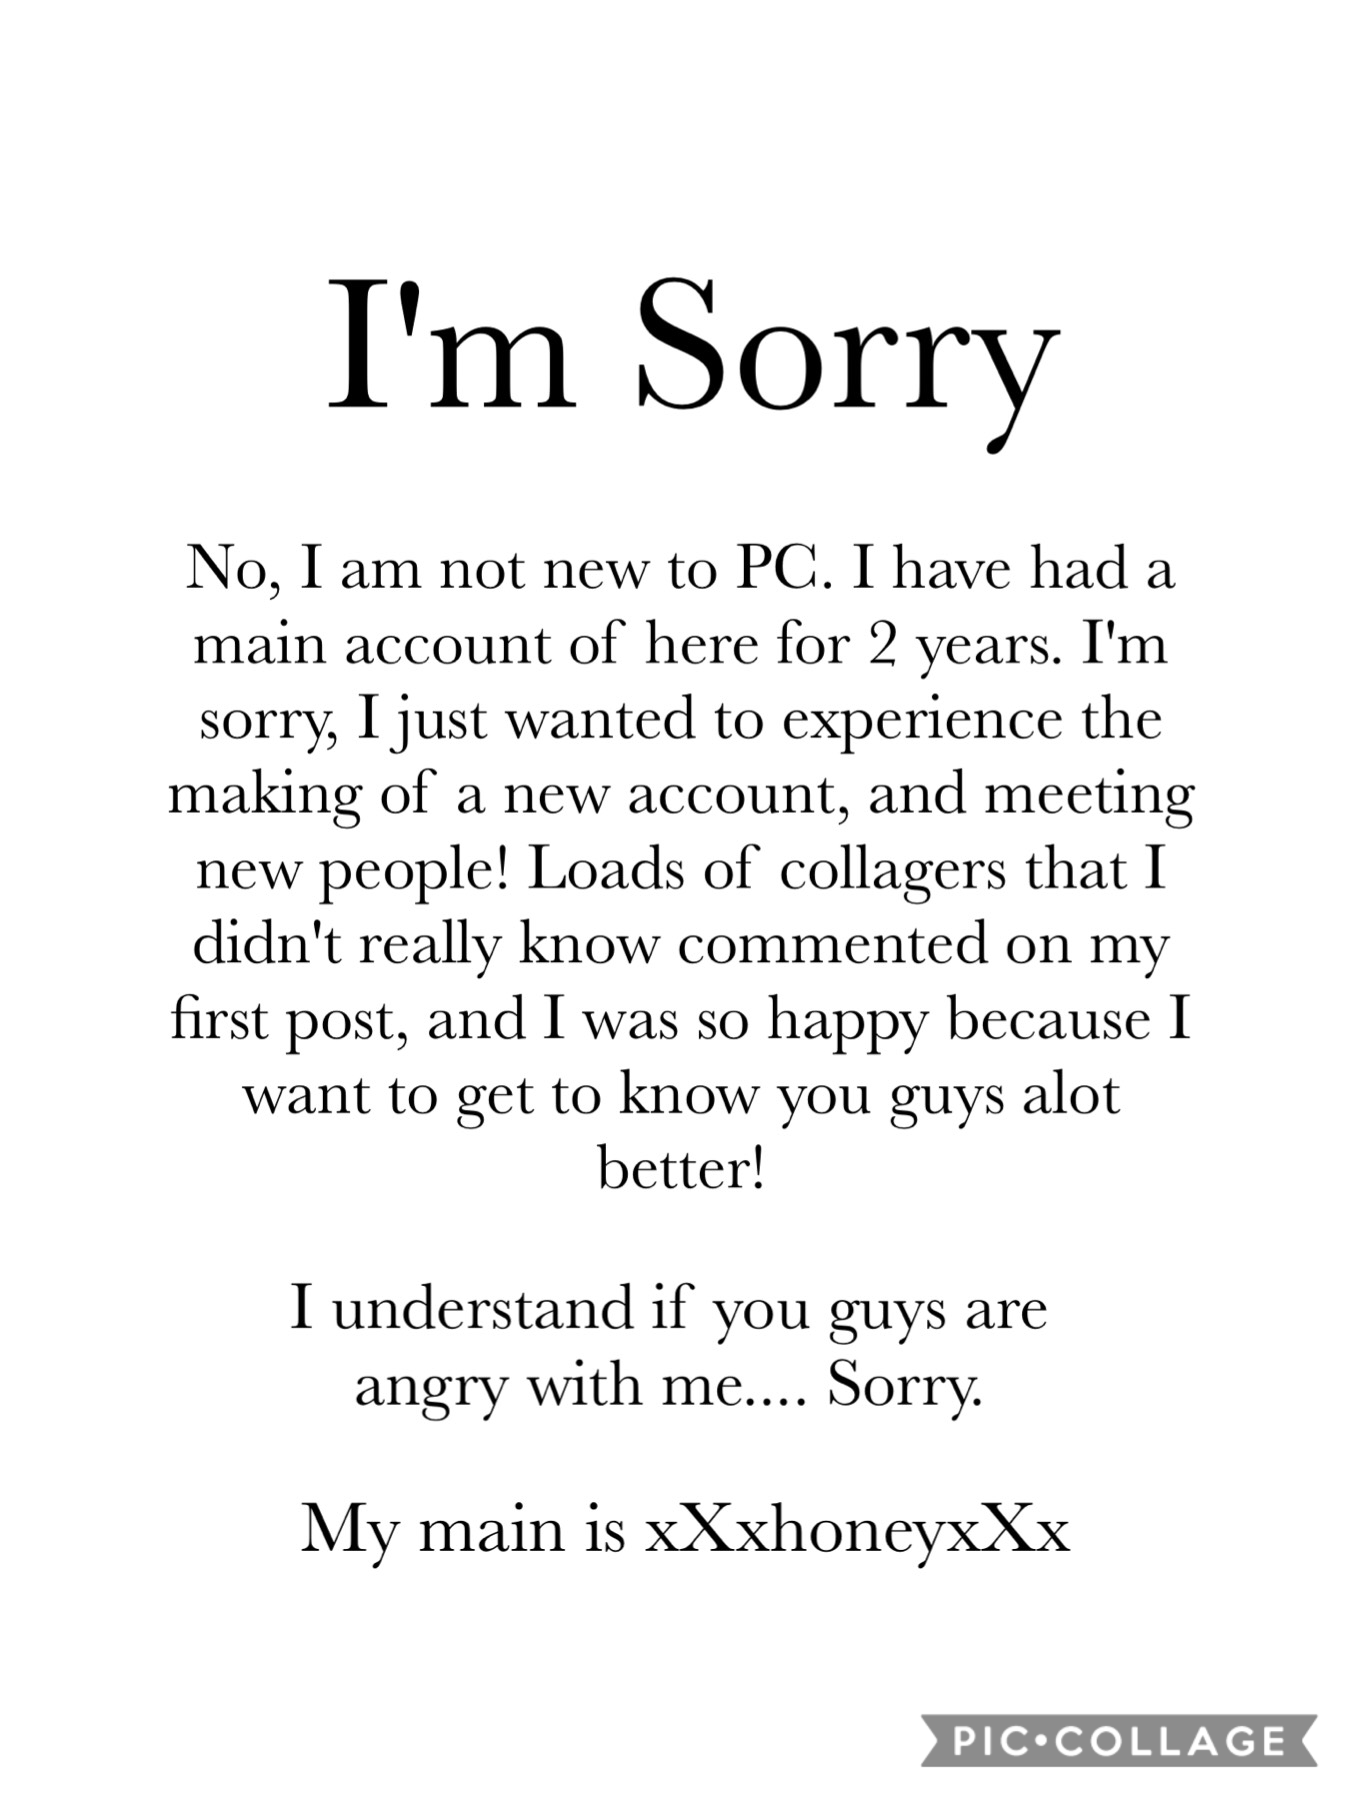 Sorry guys :(